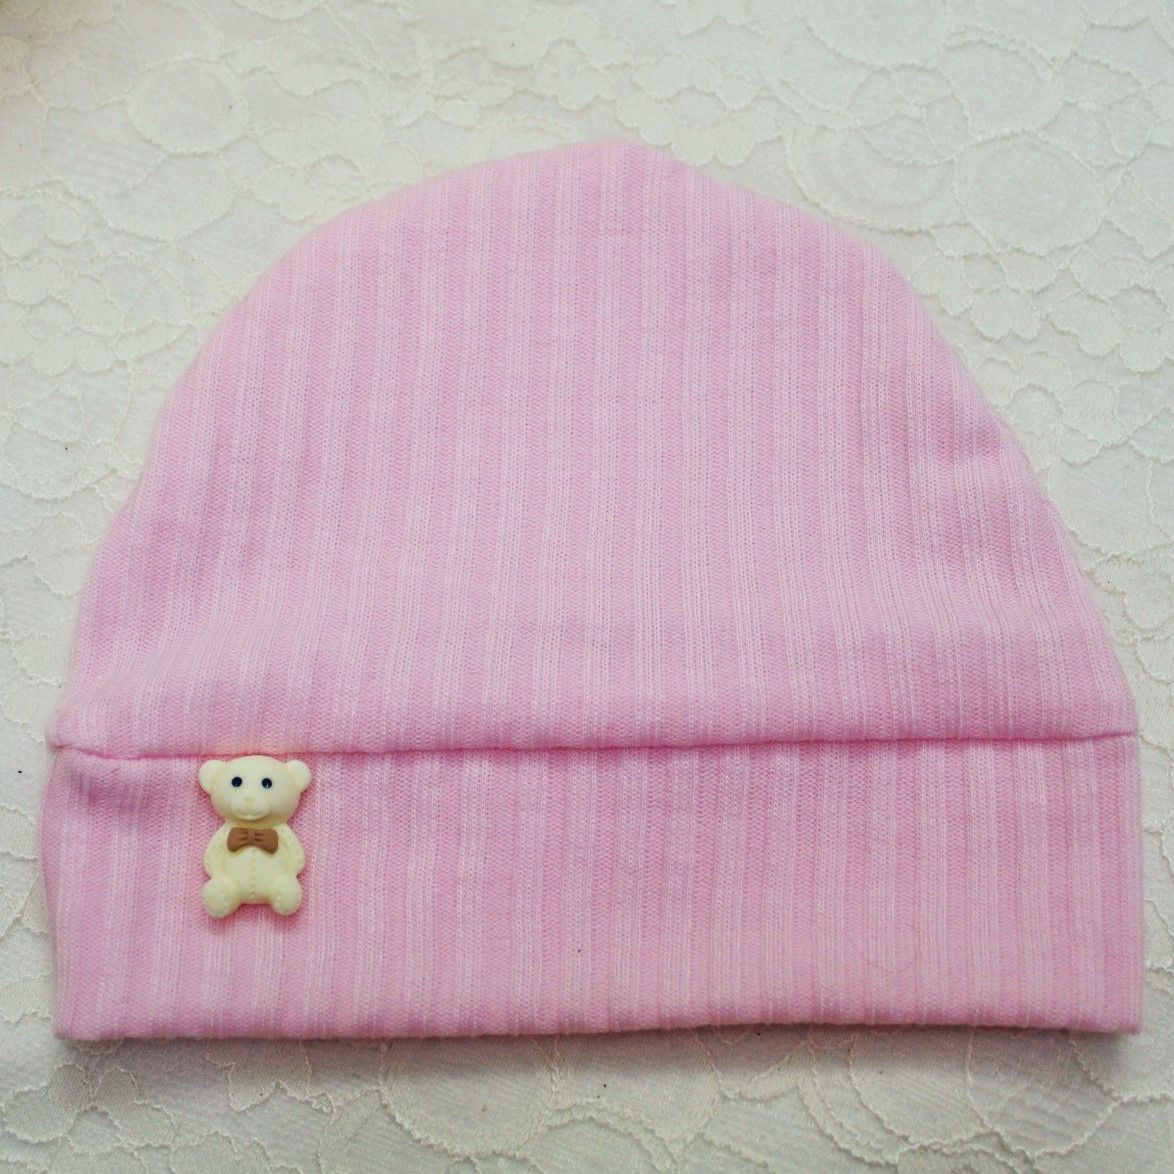 کلاه نوزادی ریماز مدل خرس کد m847 رنگ صورتی -  - 4